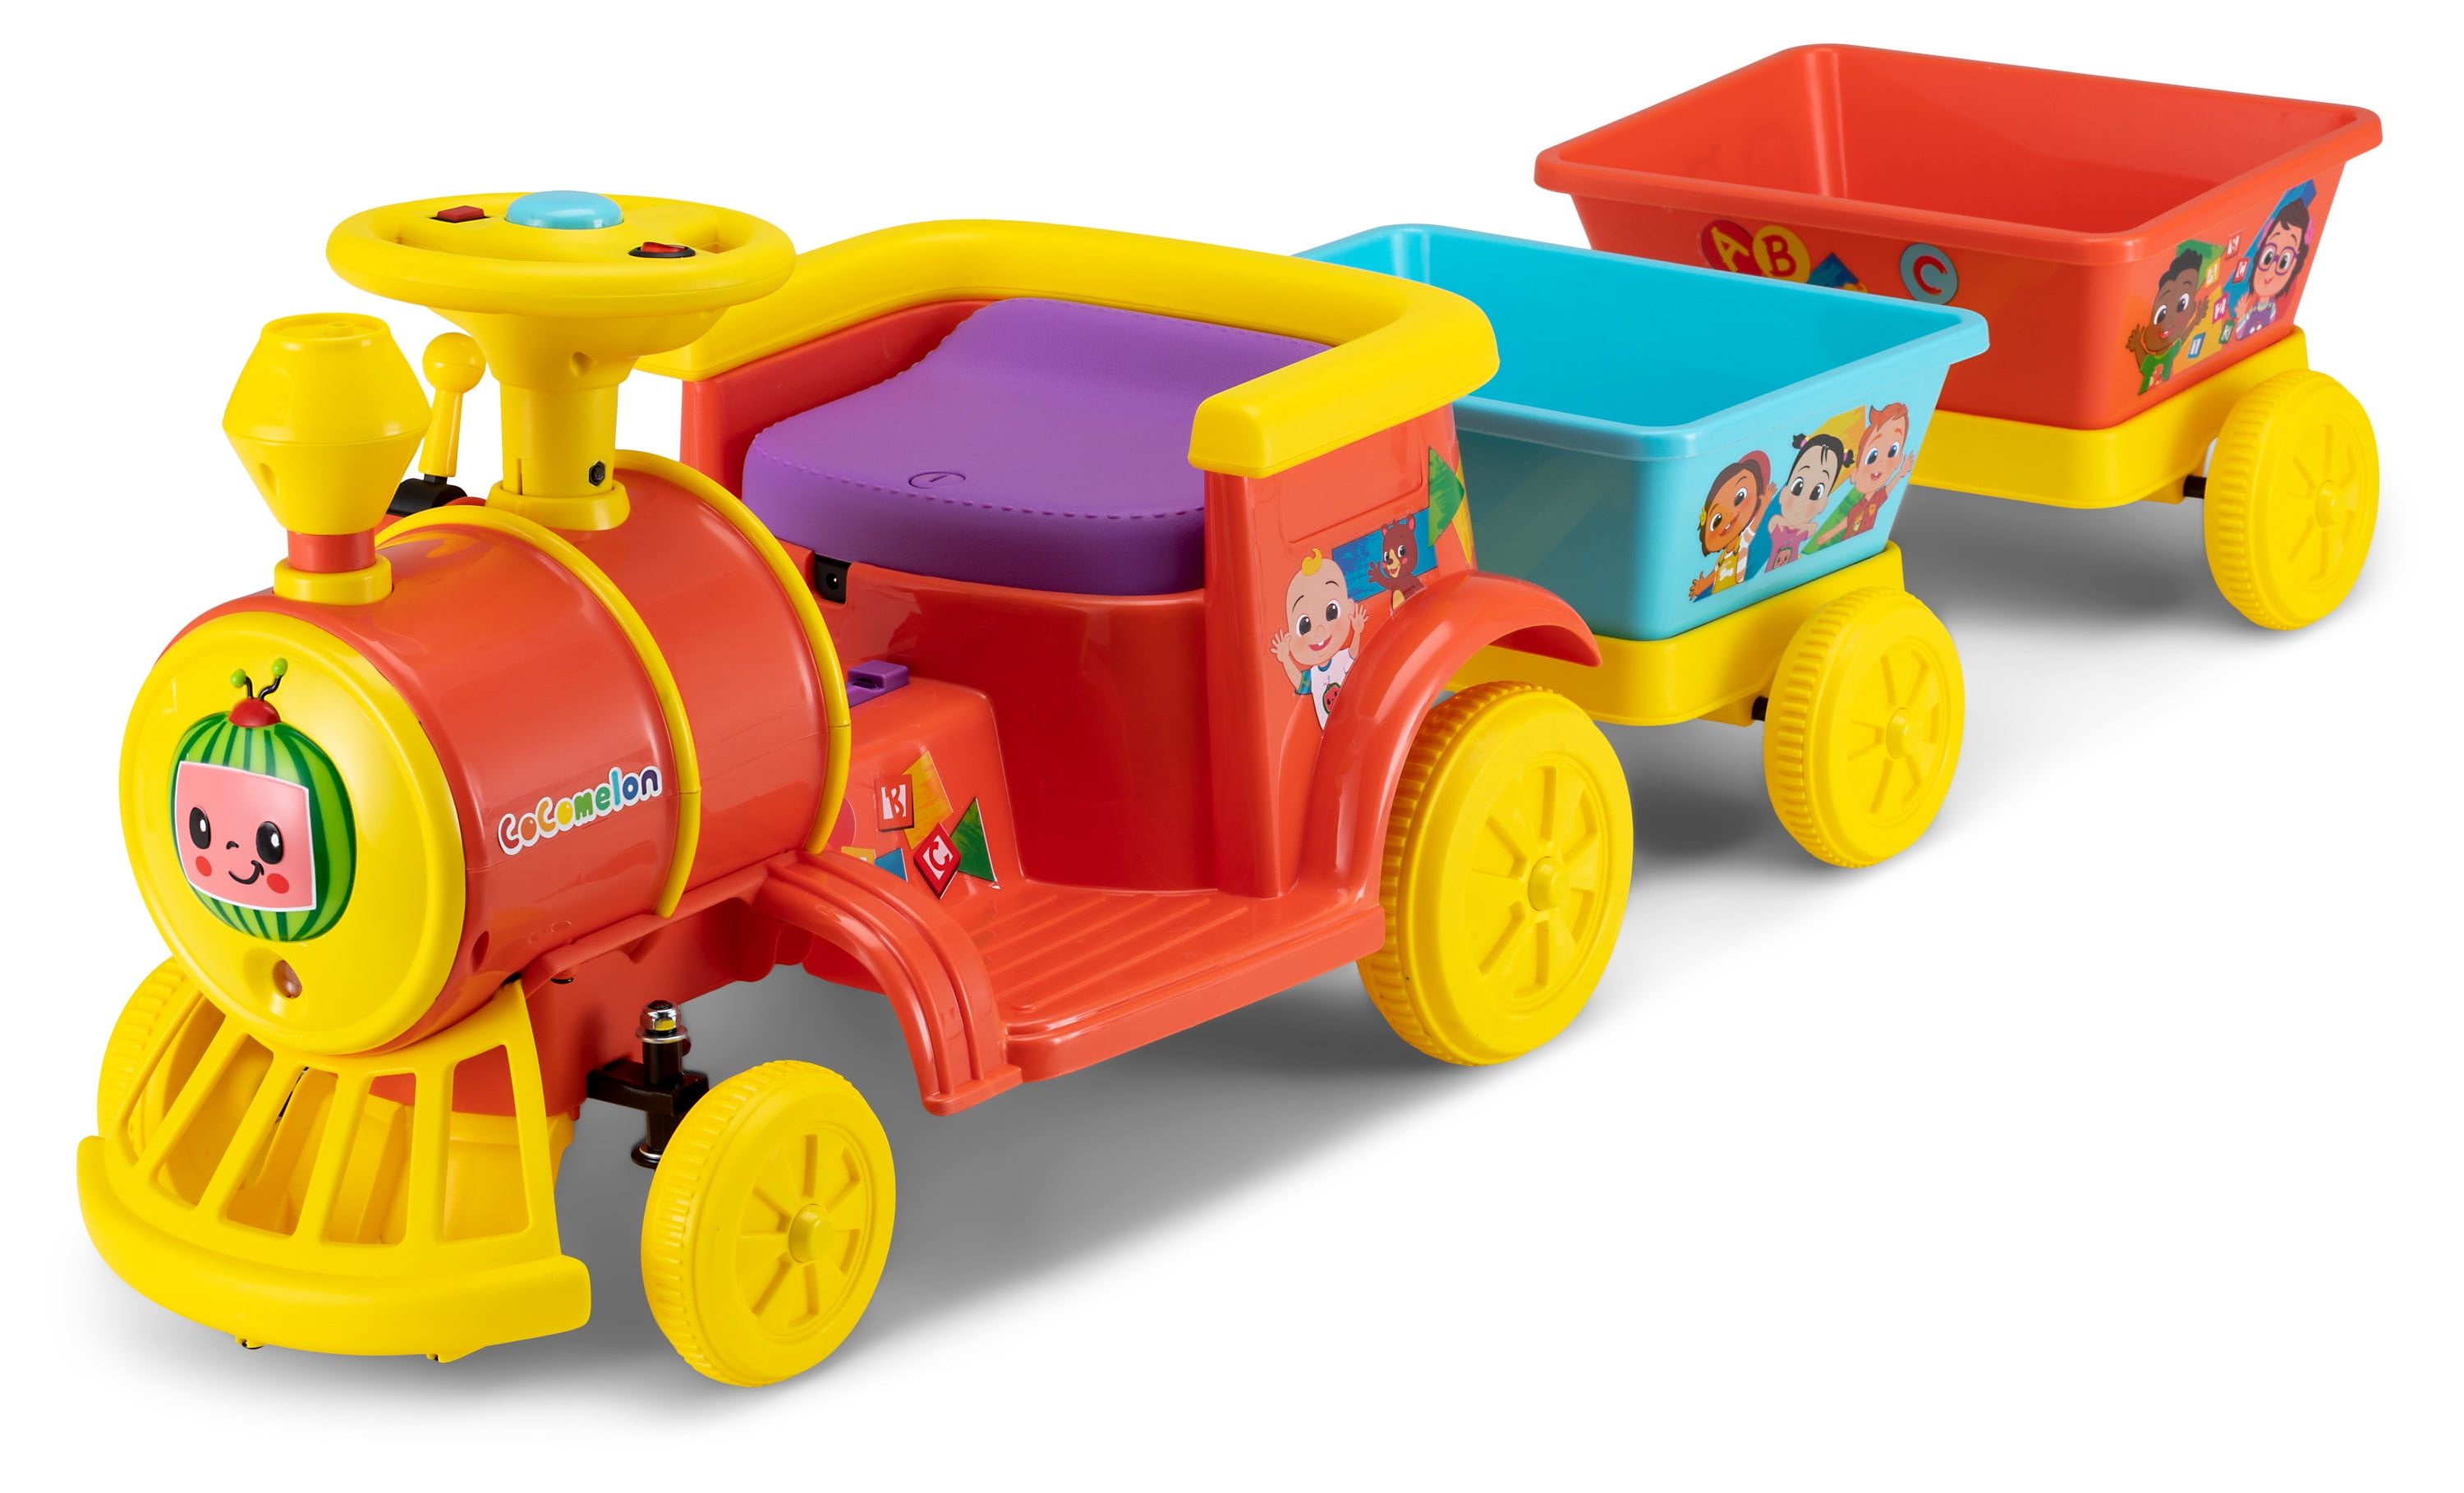 Cocomelon Choo Choo Train Ride-On Toy, 6-Volt